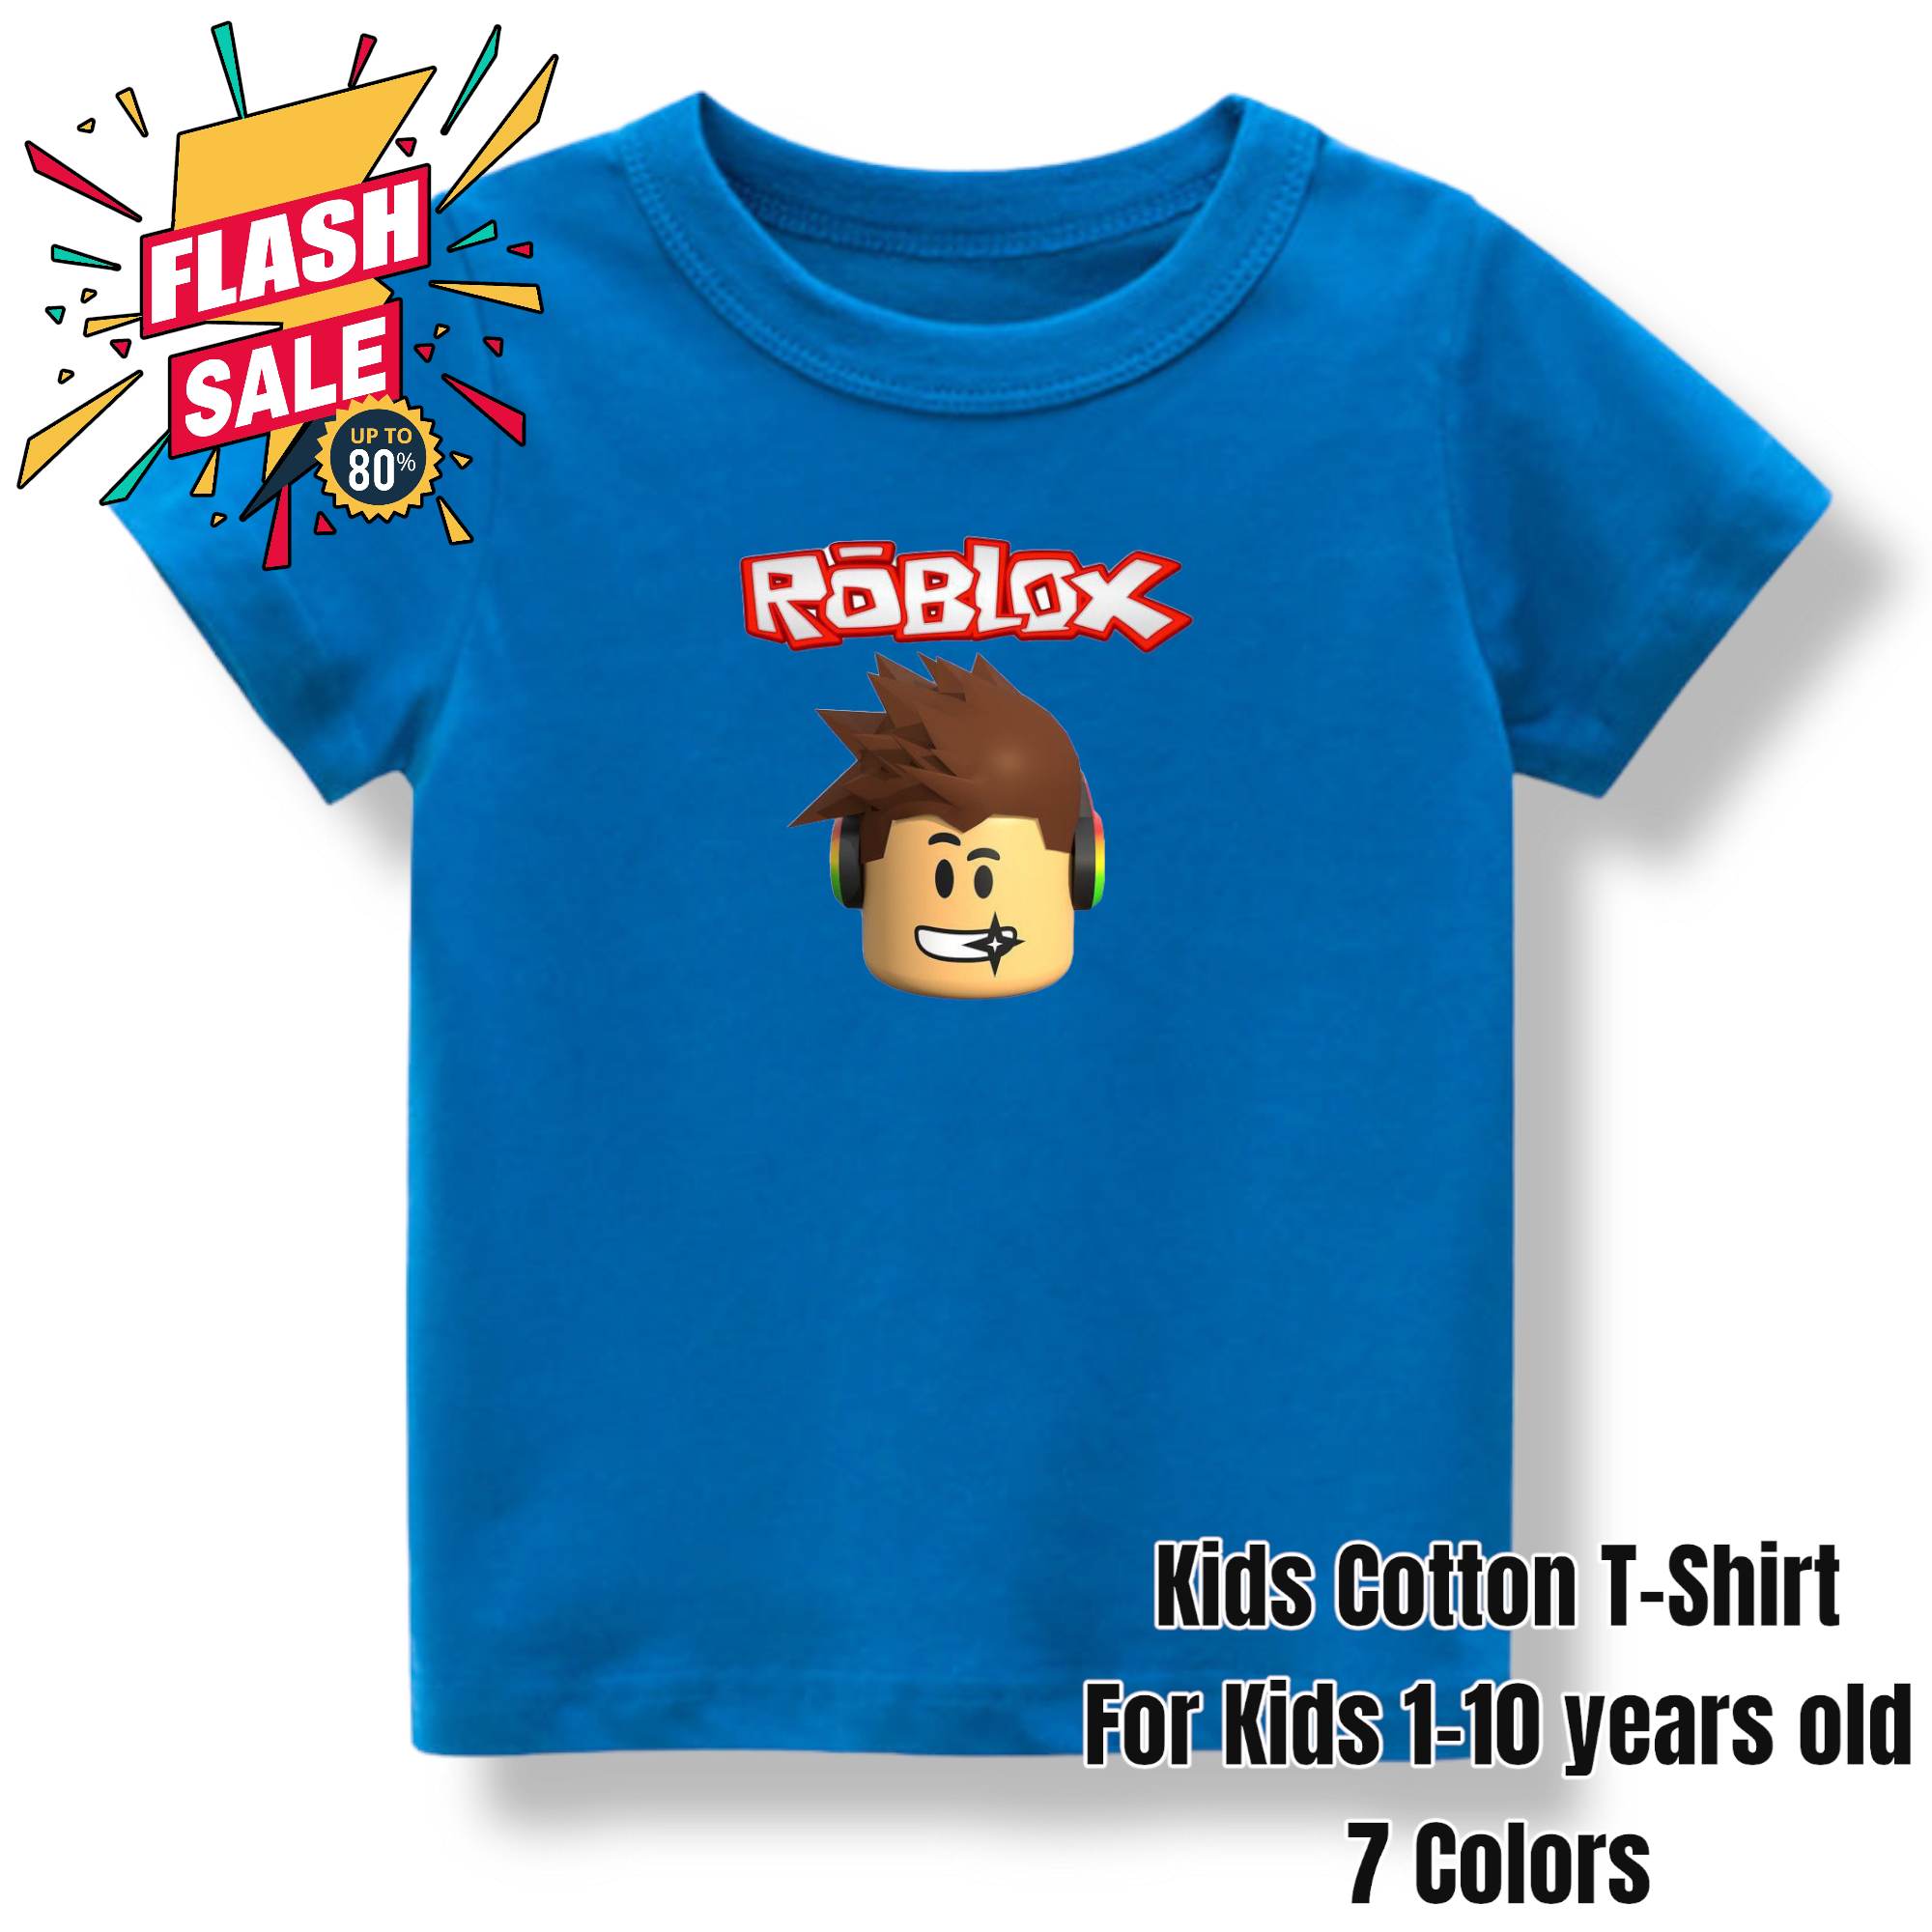 Terno jogger tshirt Roblox Quality cotton 3-10 yrs old sizes